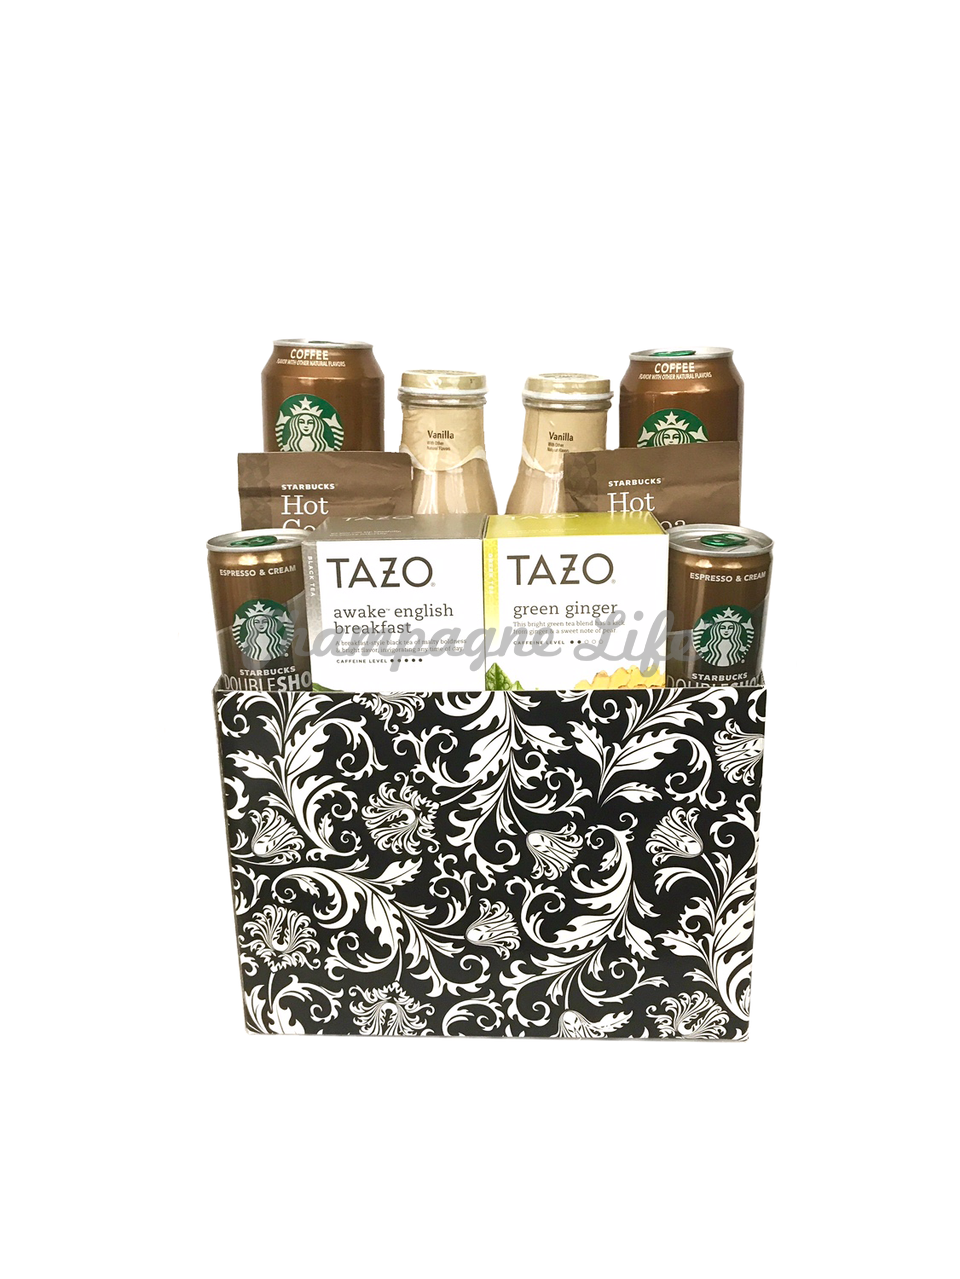 Starbucks Lovers Gift Box